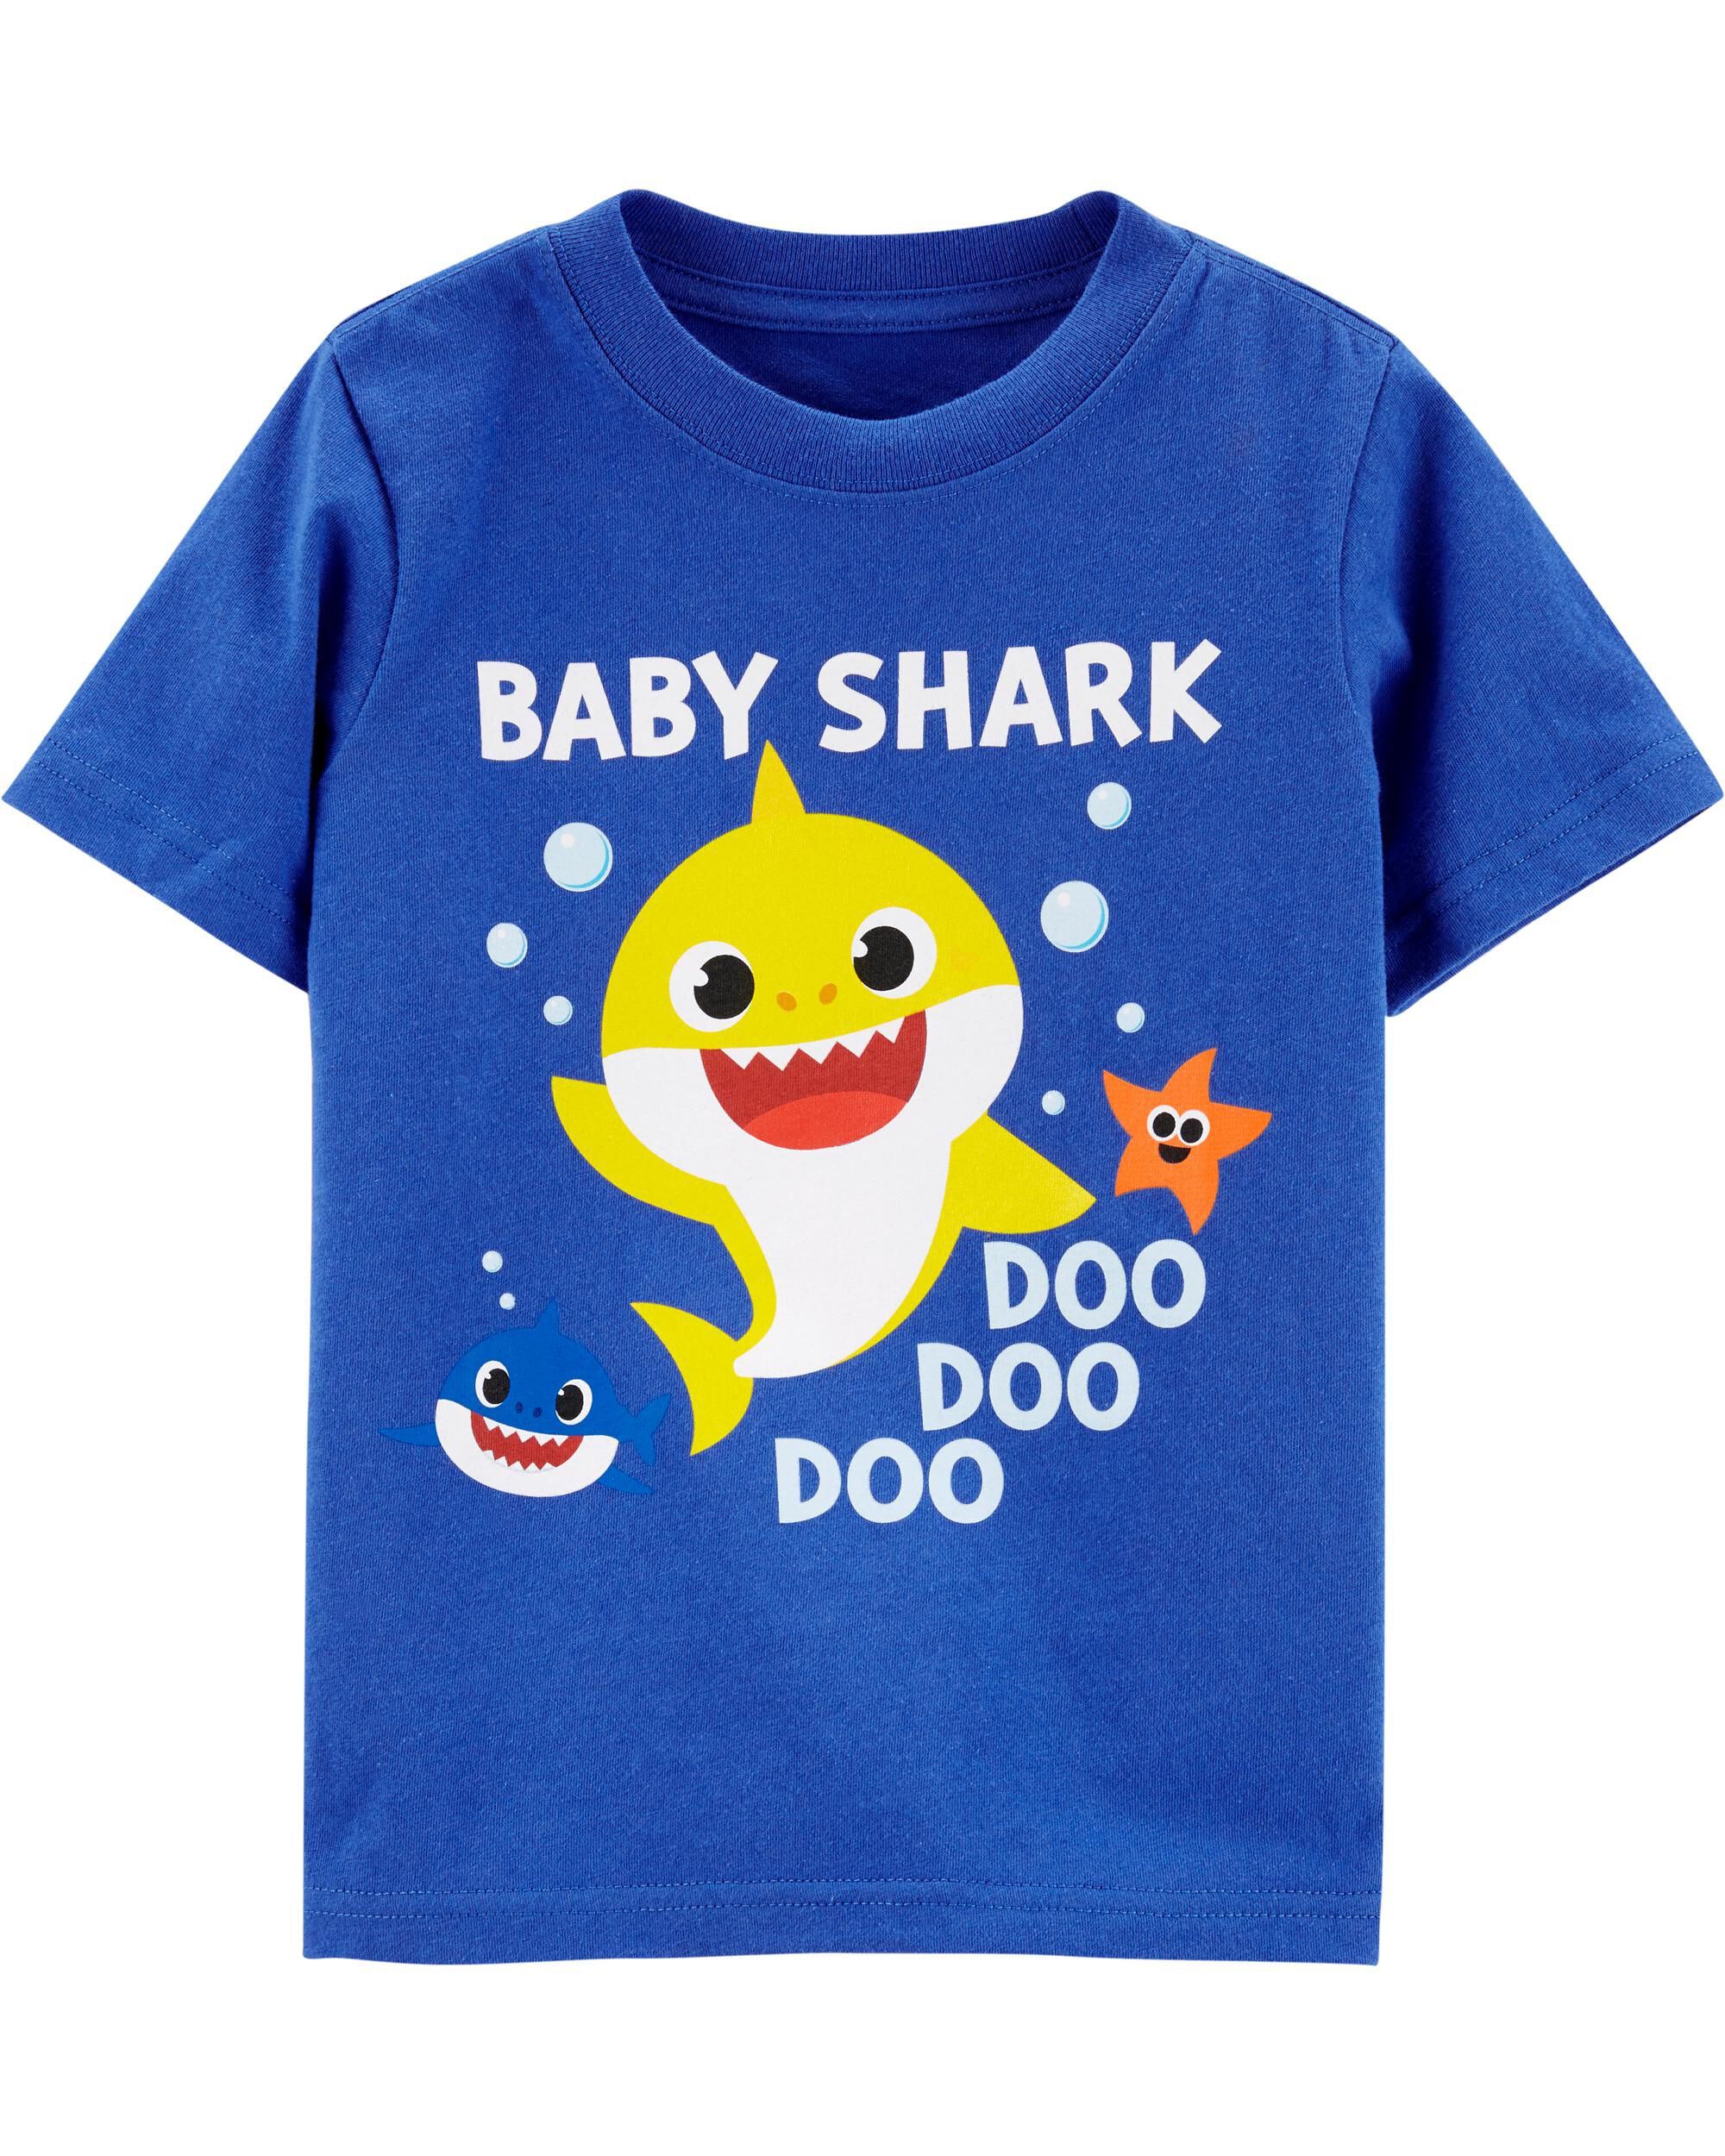 Funny Baby Shark Family Graphic T-Shirt Cool Baby Shark Tee shirts